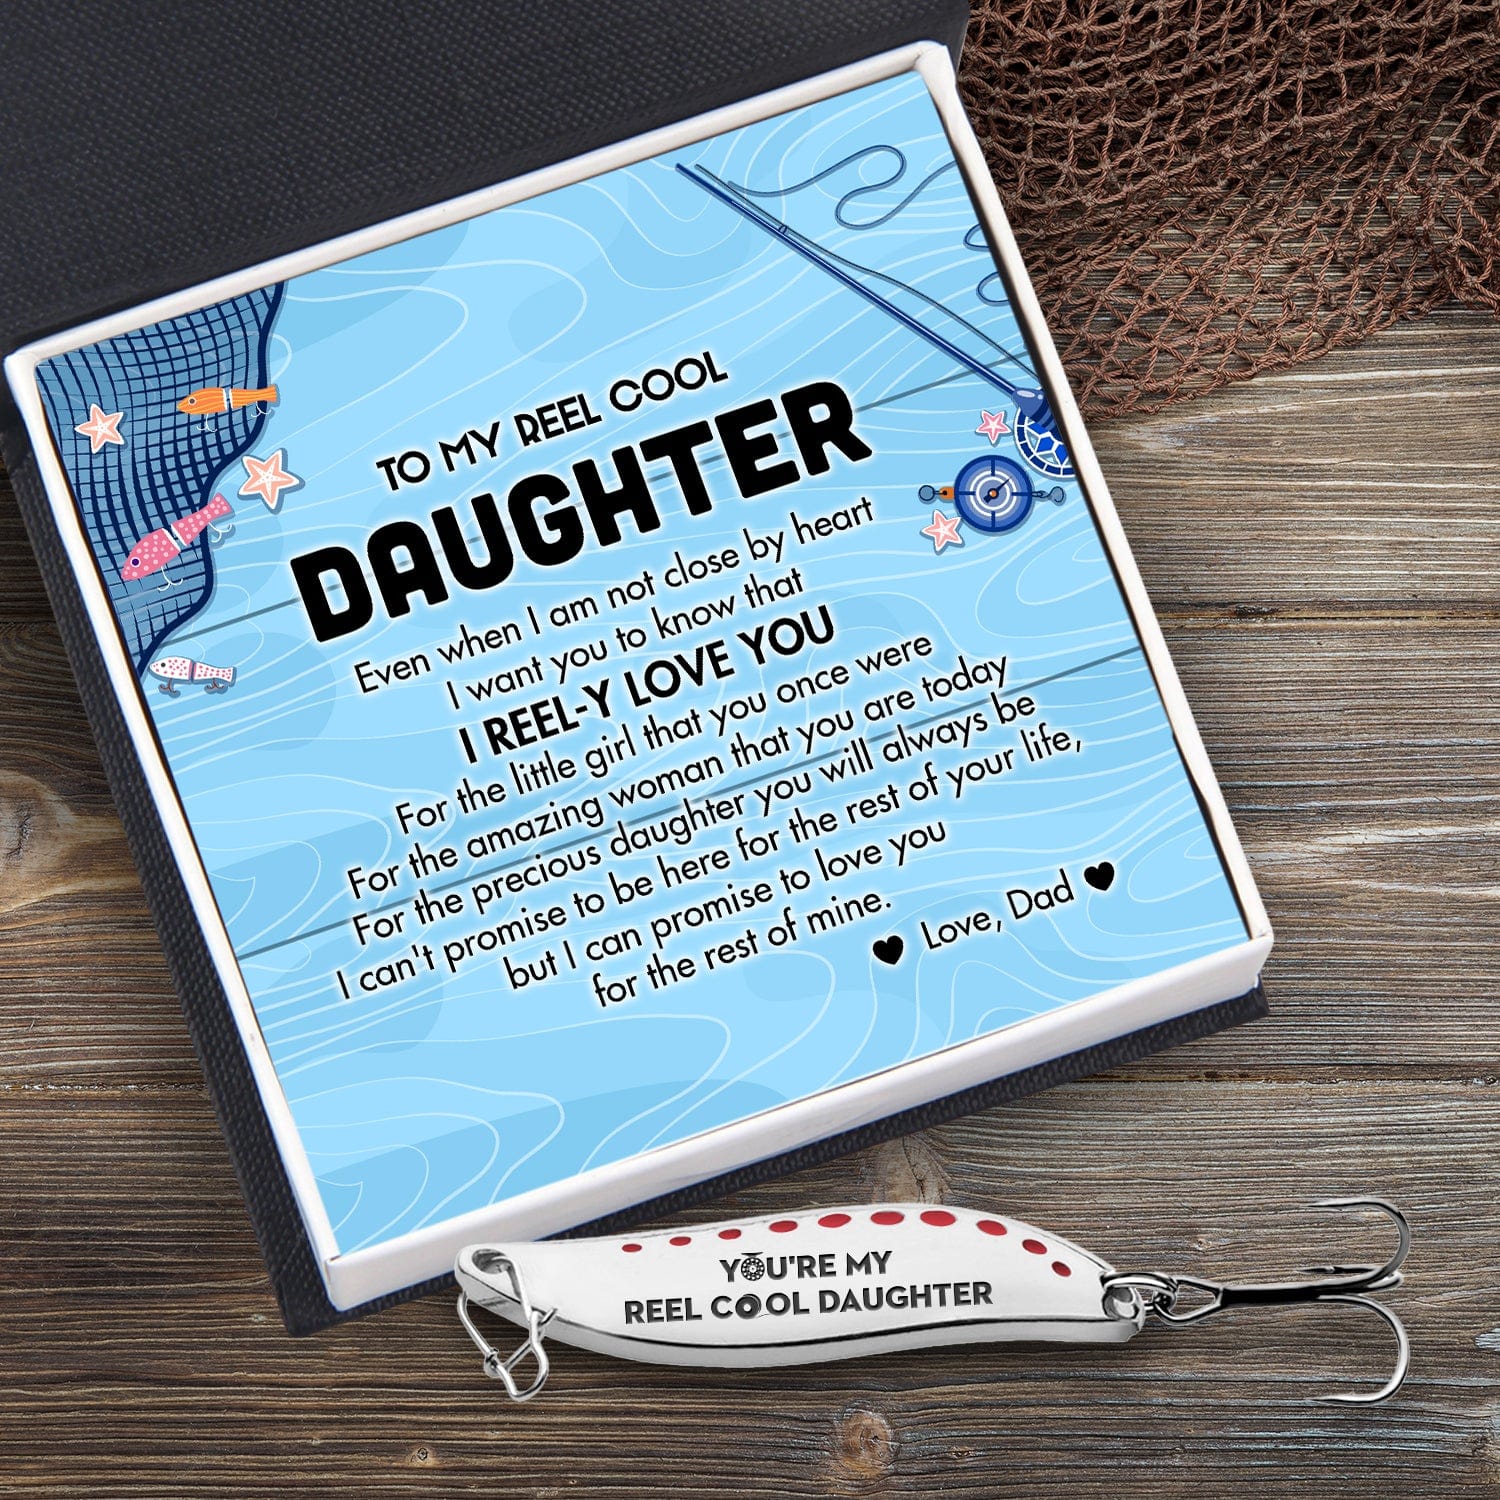 Fishing Spoon Lure - Fishing - To My Daughter - I Reel-y Love You - Gfaa17001